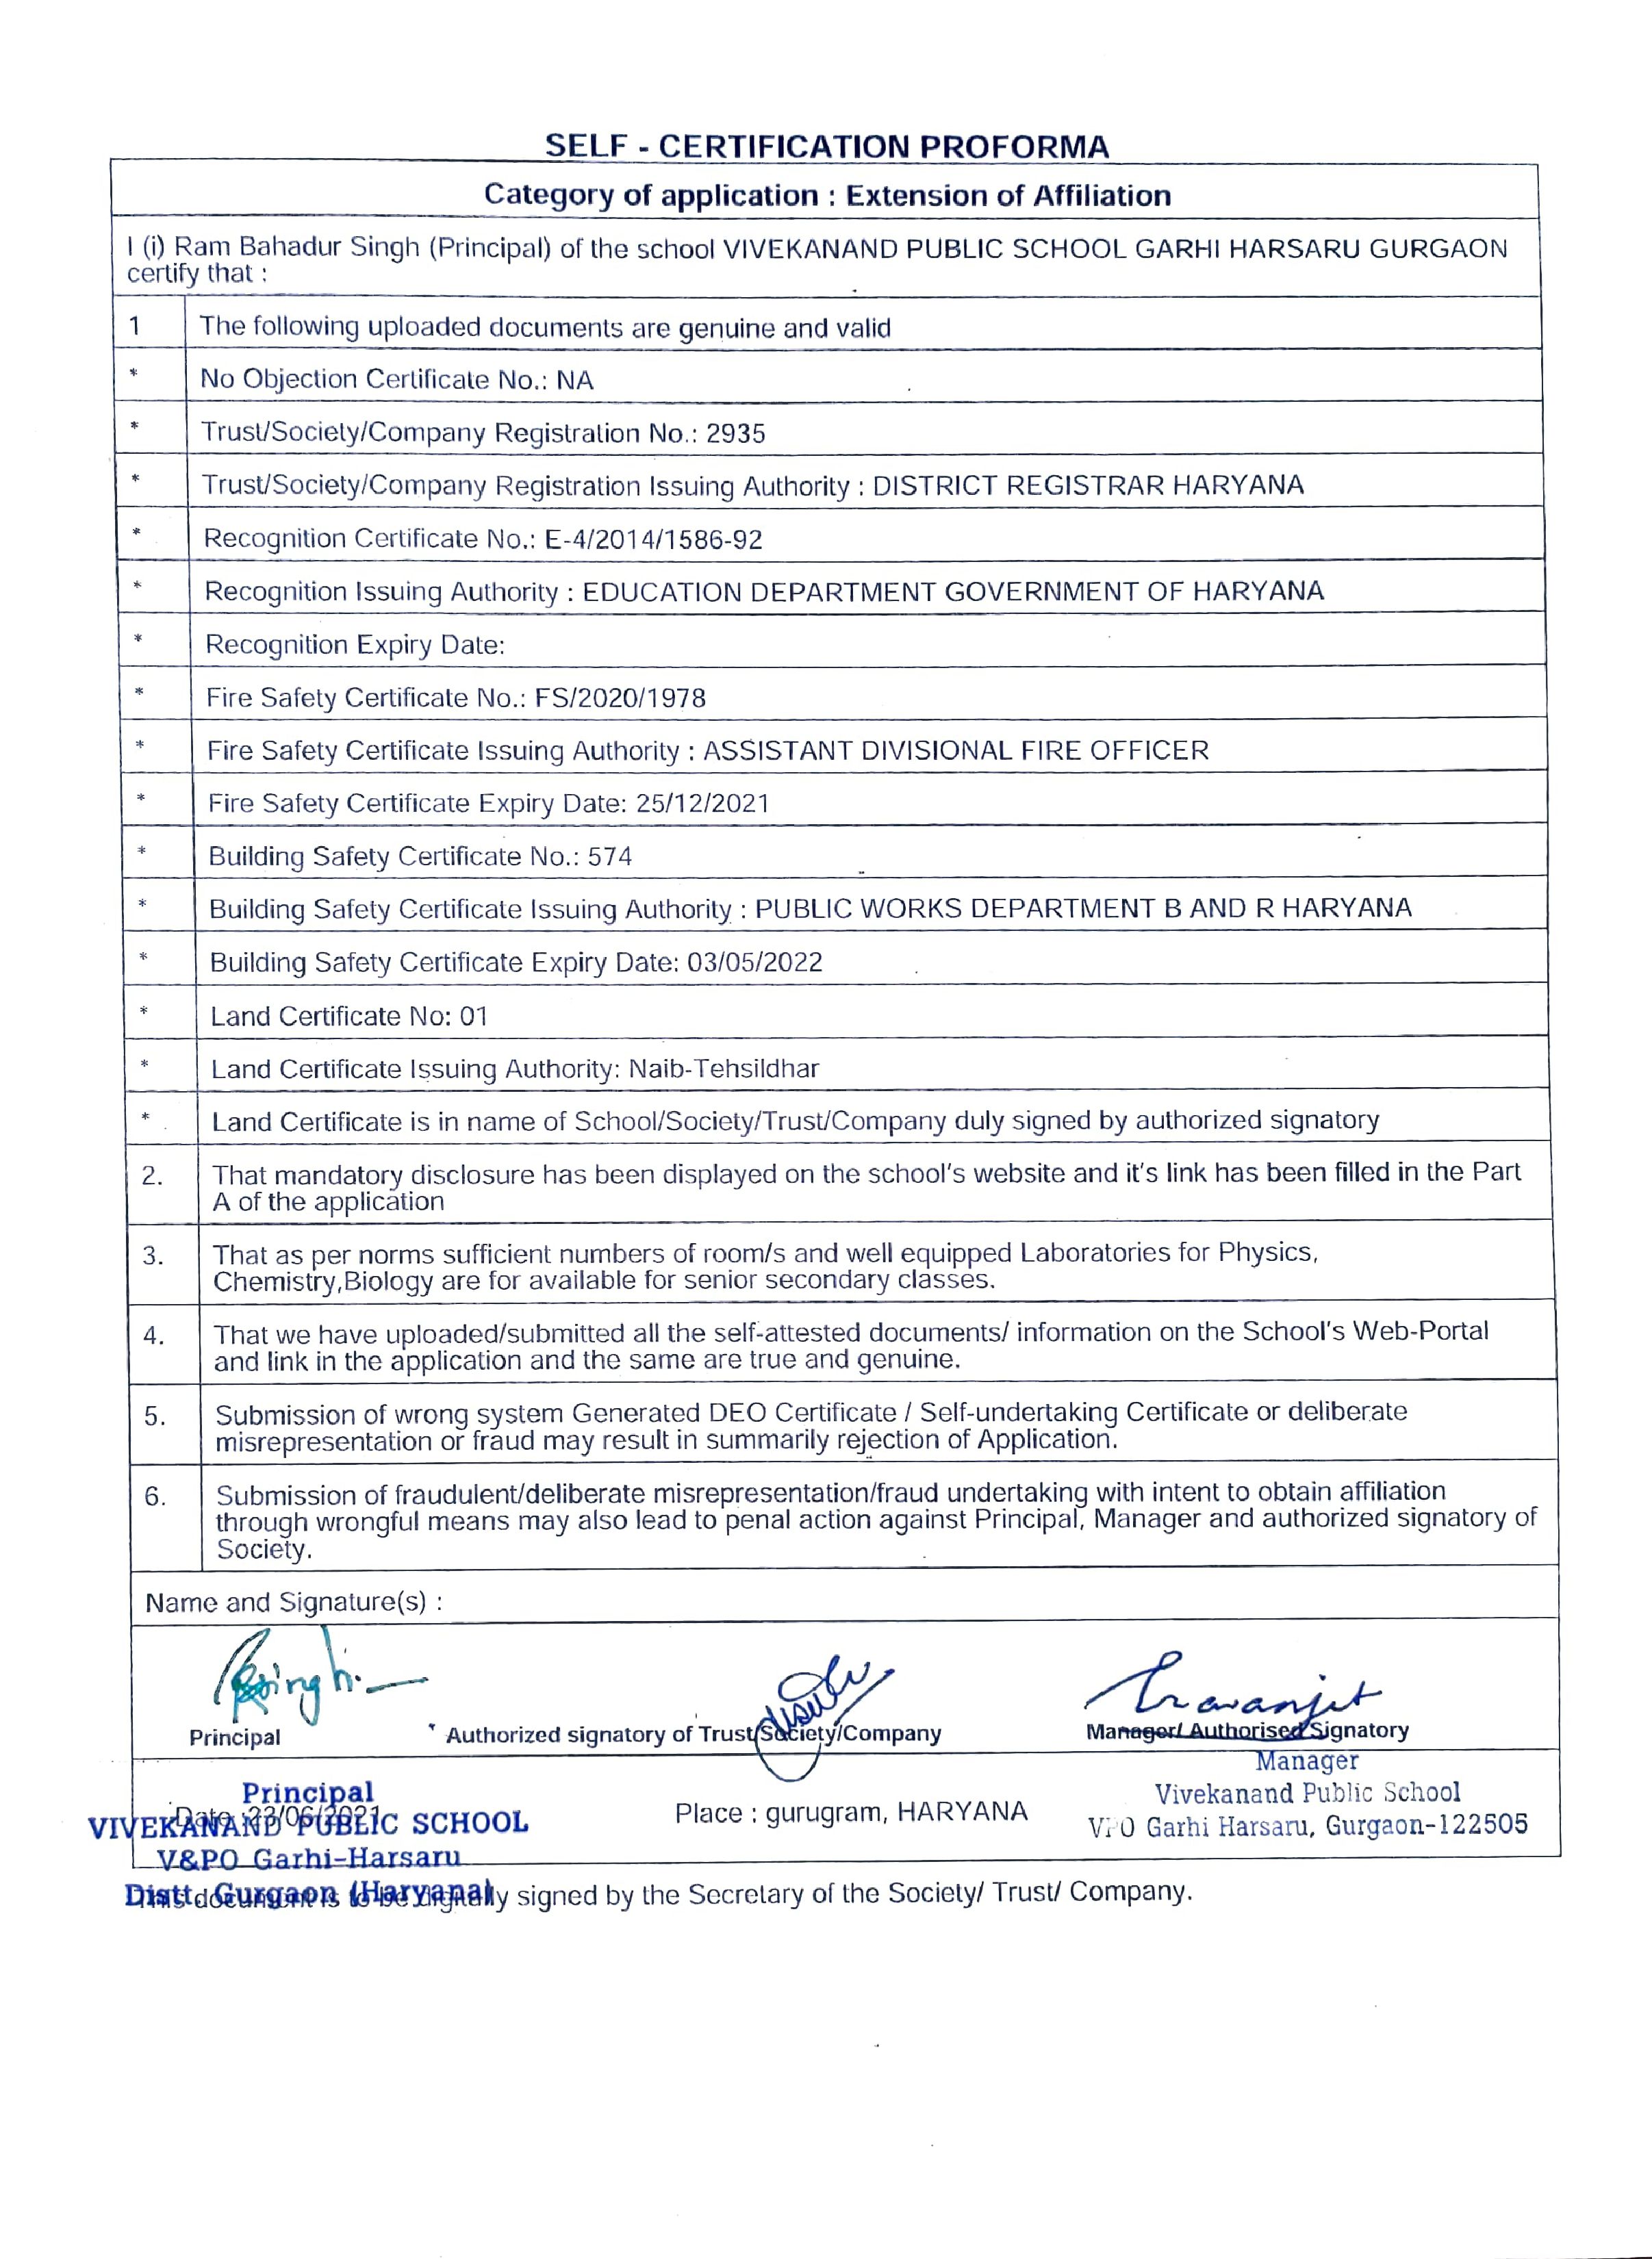 Vivekanand Public School Self Certificate